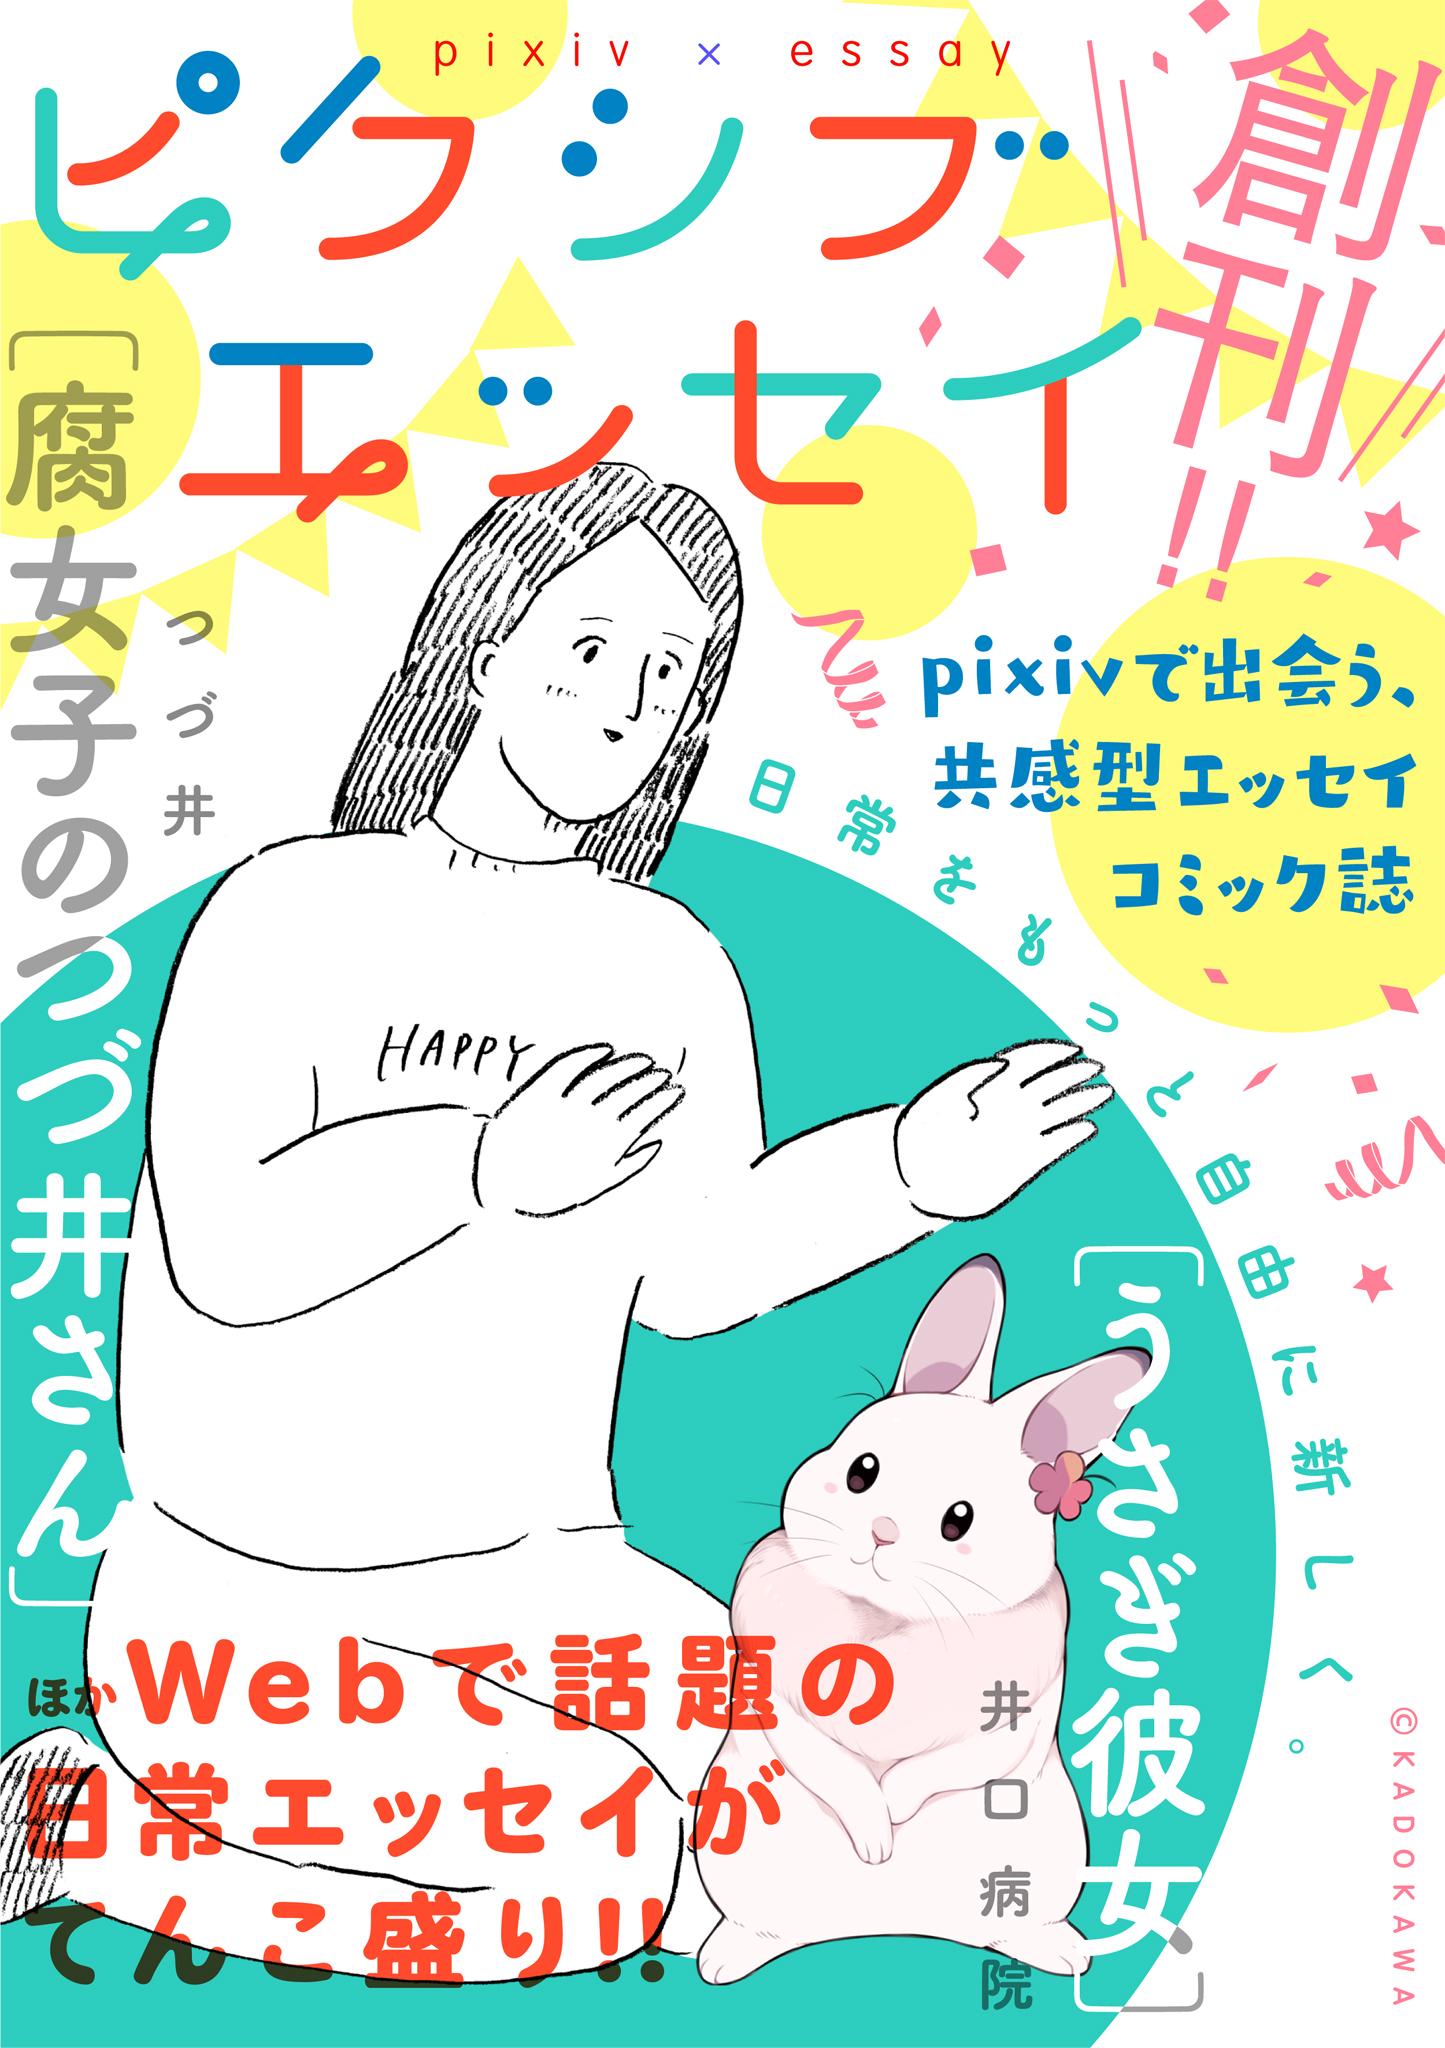 Pixiv Kadokawa によるwebエッセイコミック誌 ピクシブエッセイ 6月13日 月 創刊 株式会社kadokawaのプレスリリース